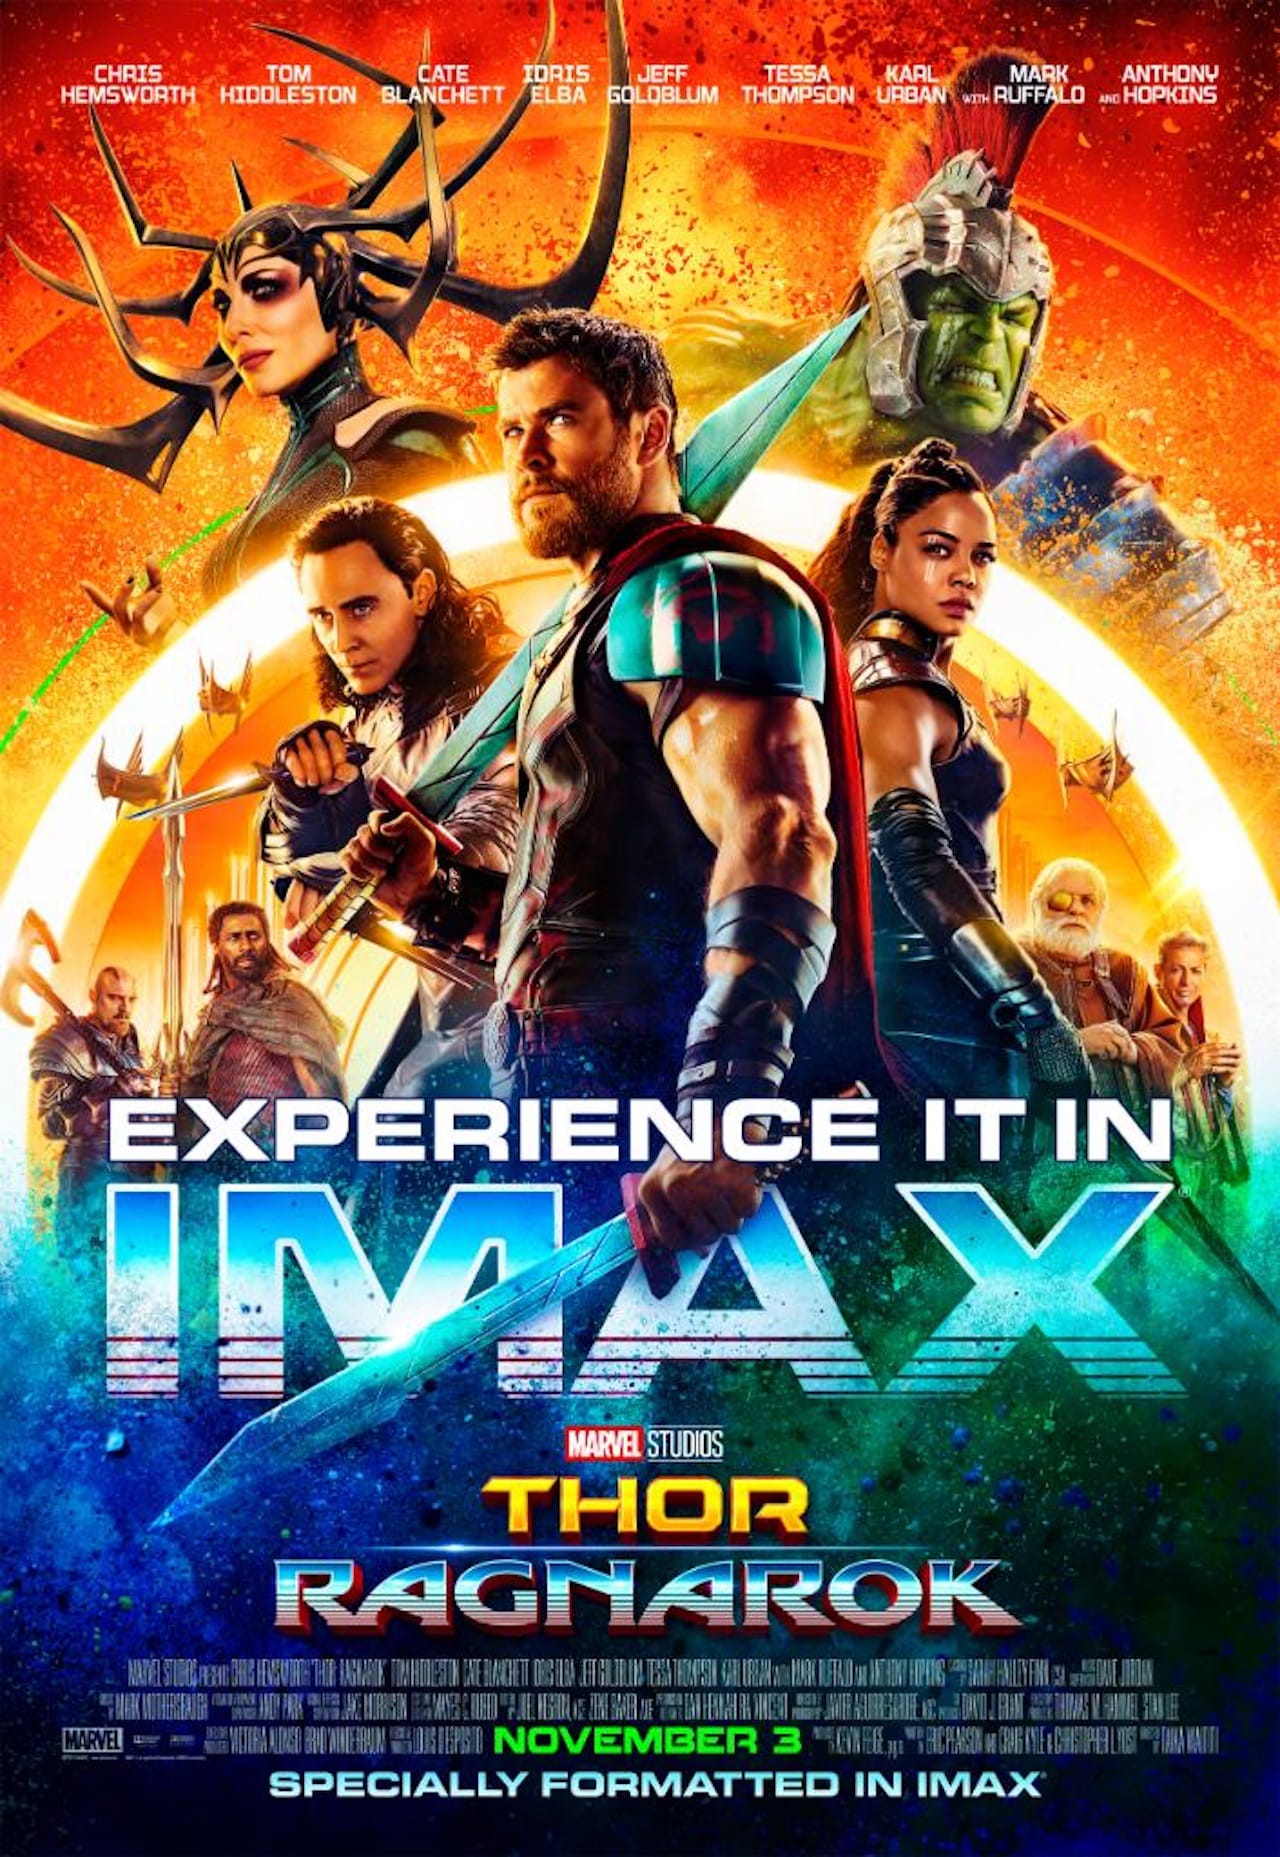 thor: ragnarok poster IMAX